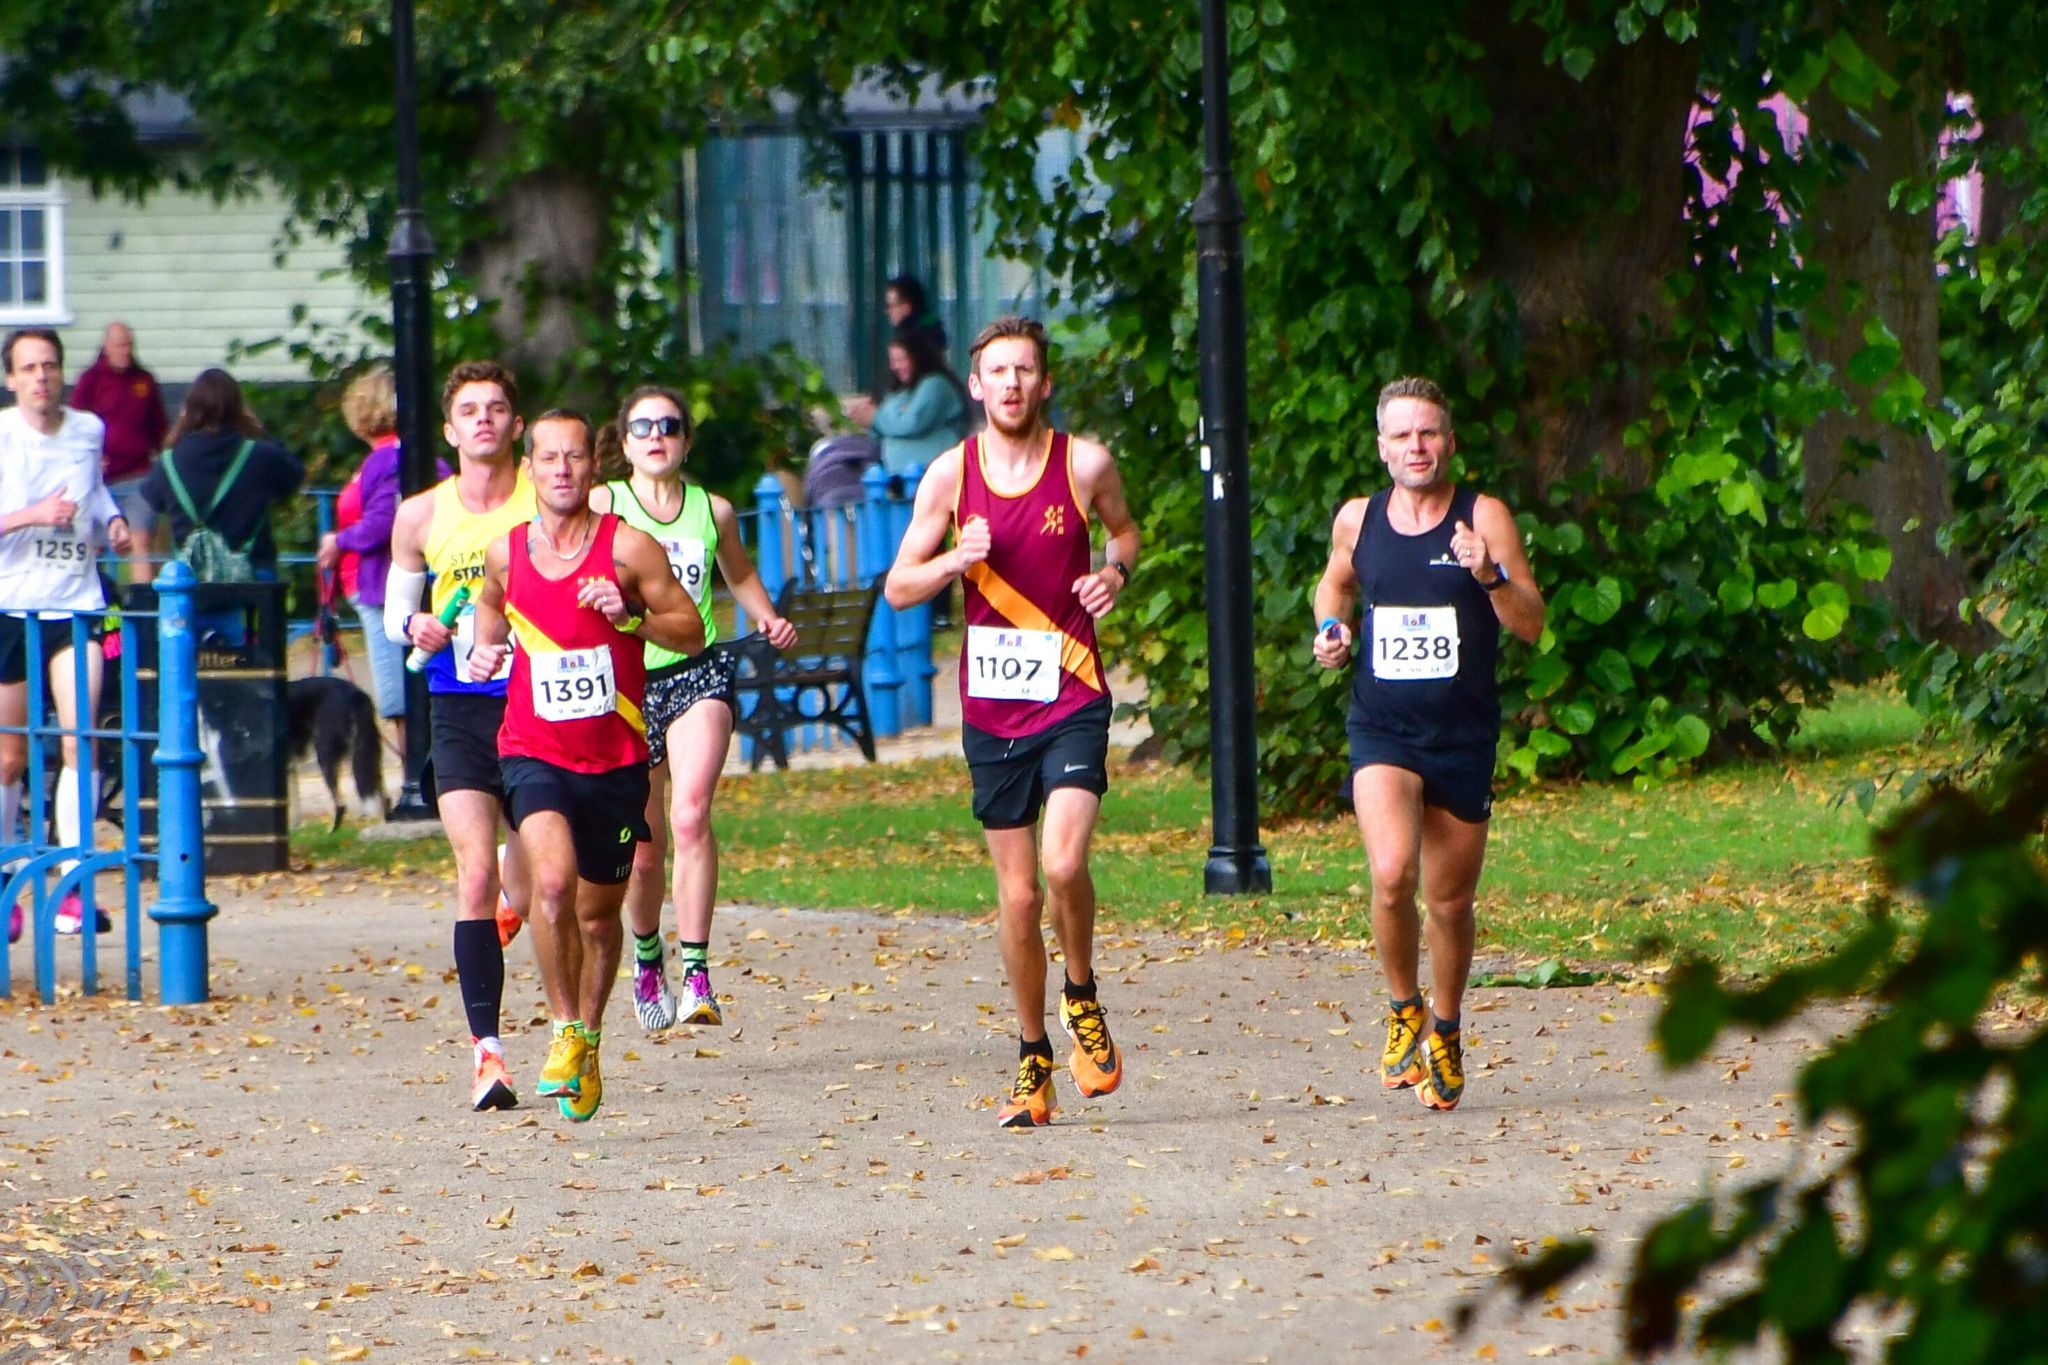 Entrants to the 2021 half-marathon running through a park